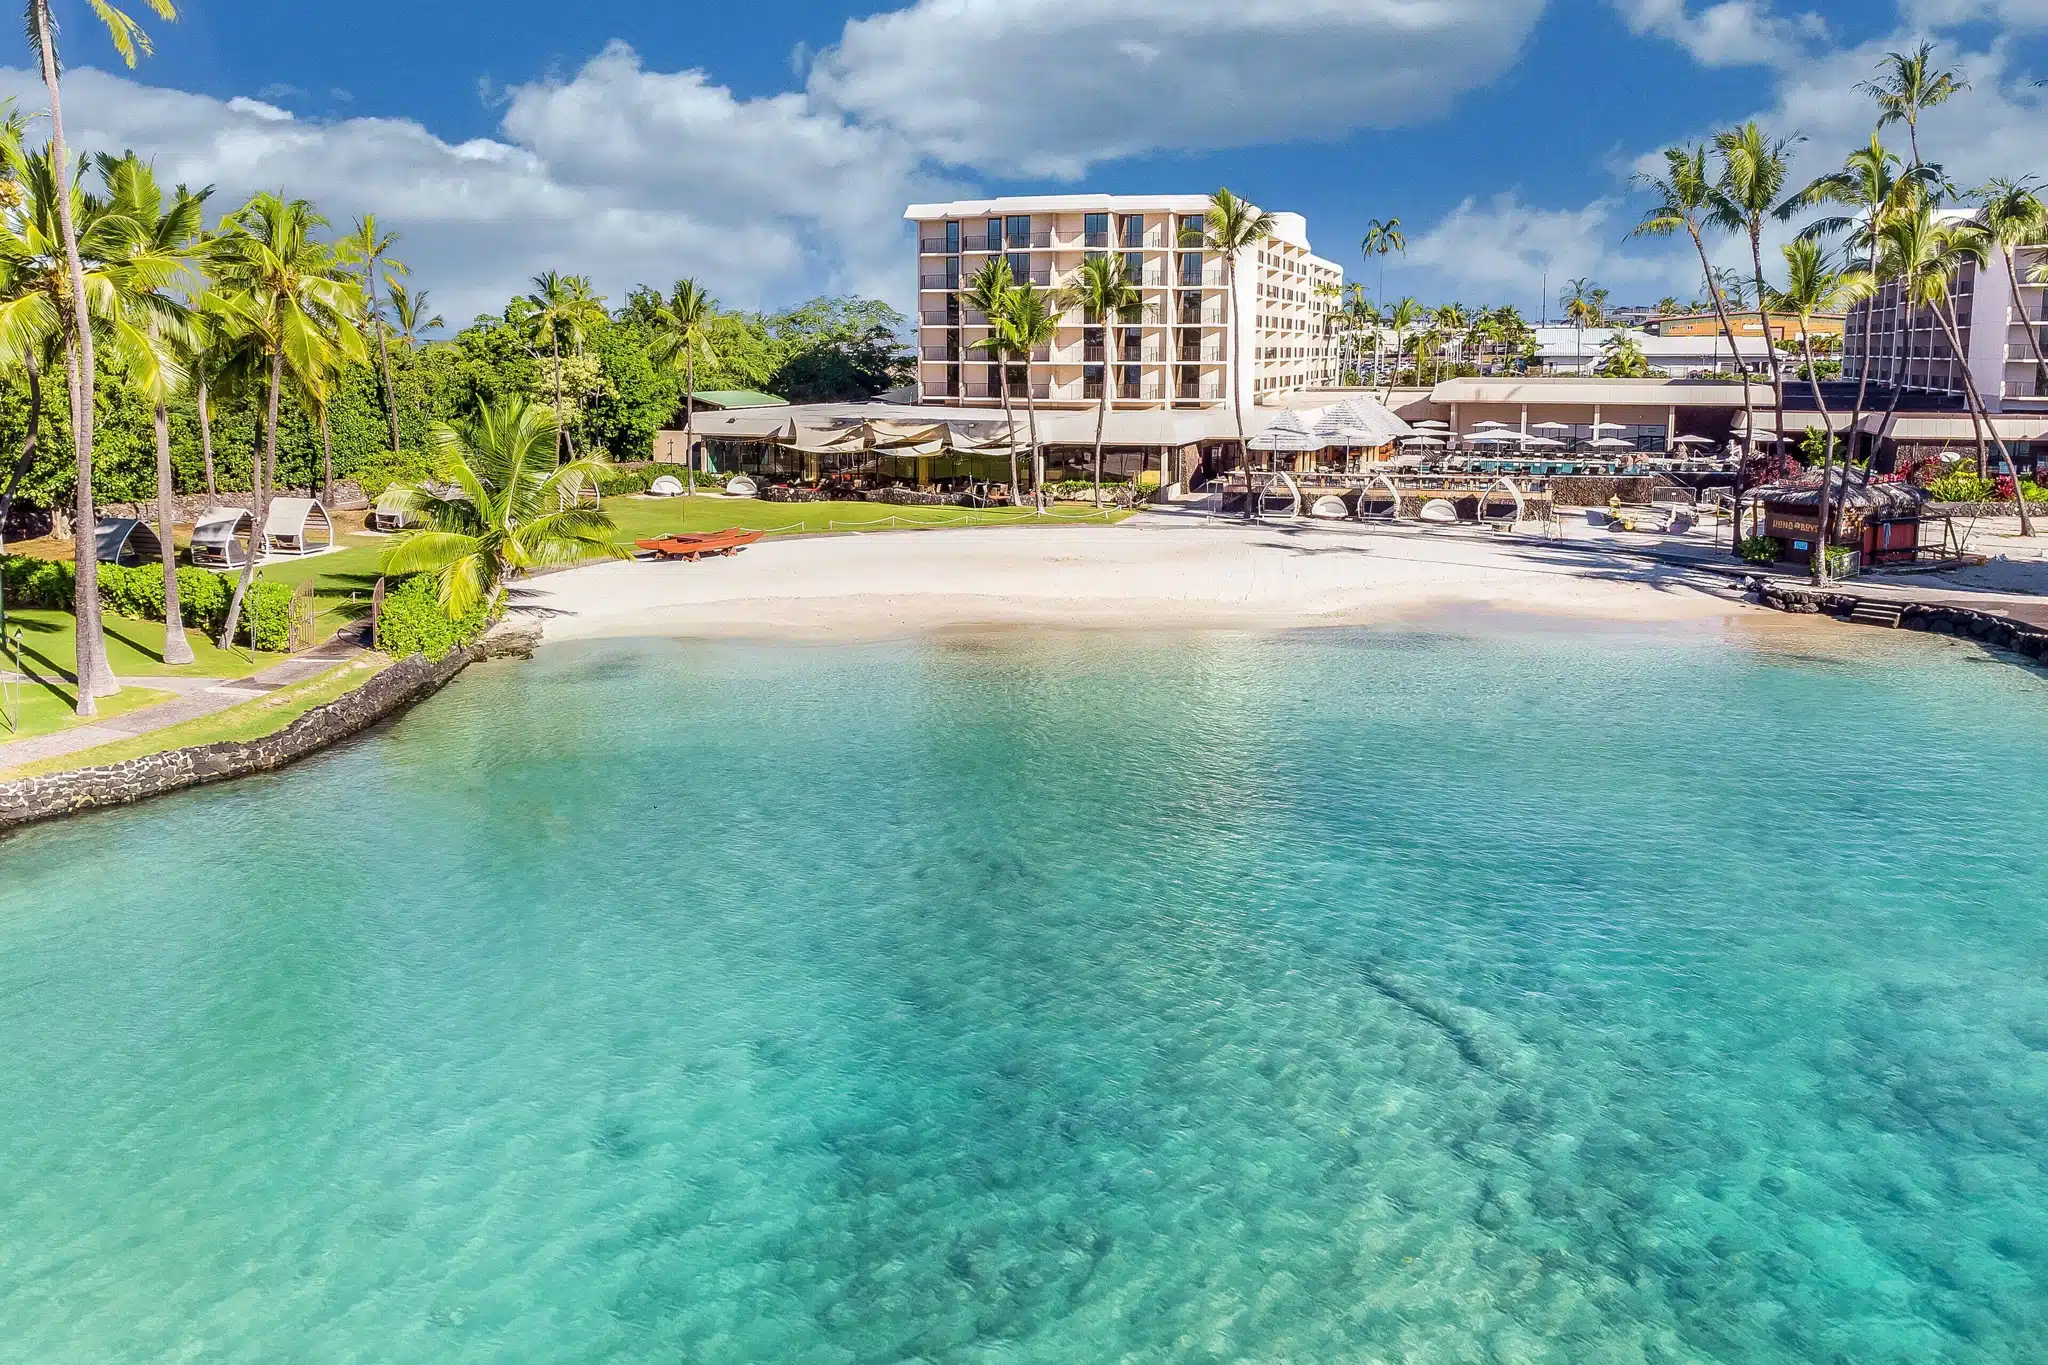 Courtyard by Marriott King Kamehameha's Kona Beach Hotel is a Hotel located in the city of Kailua-Kona on Big Island, Hawaii